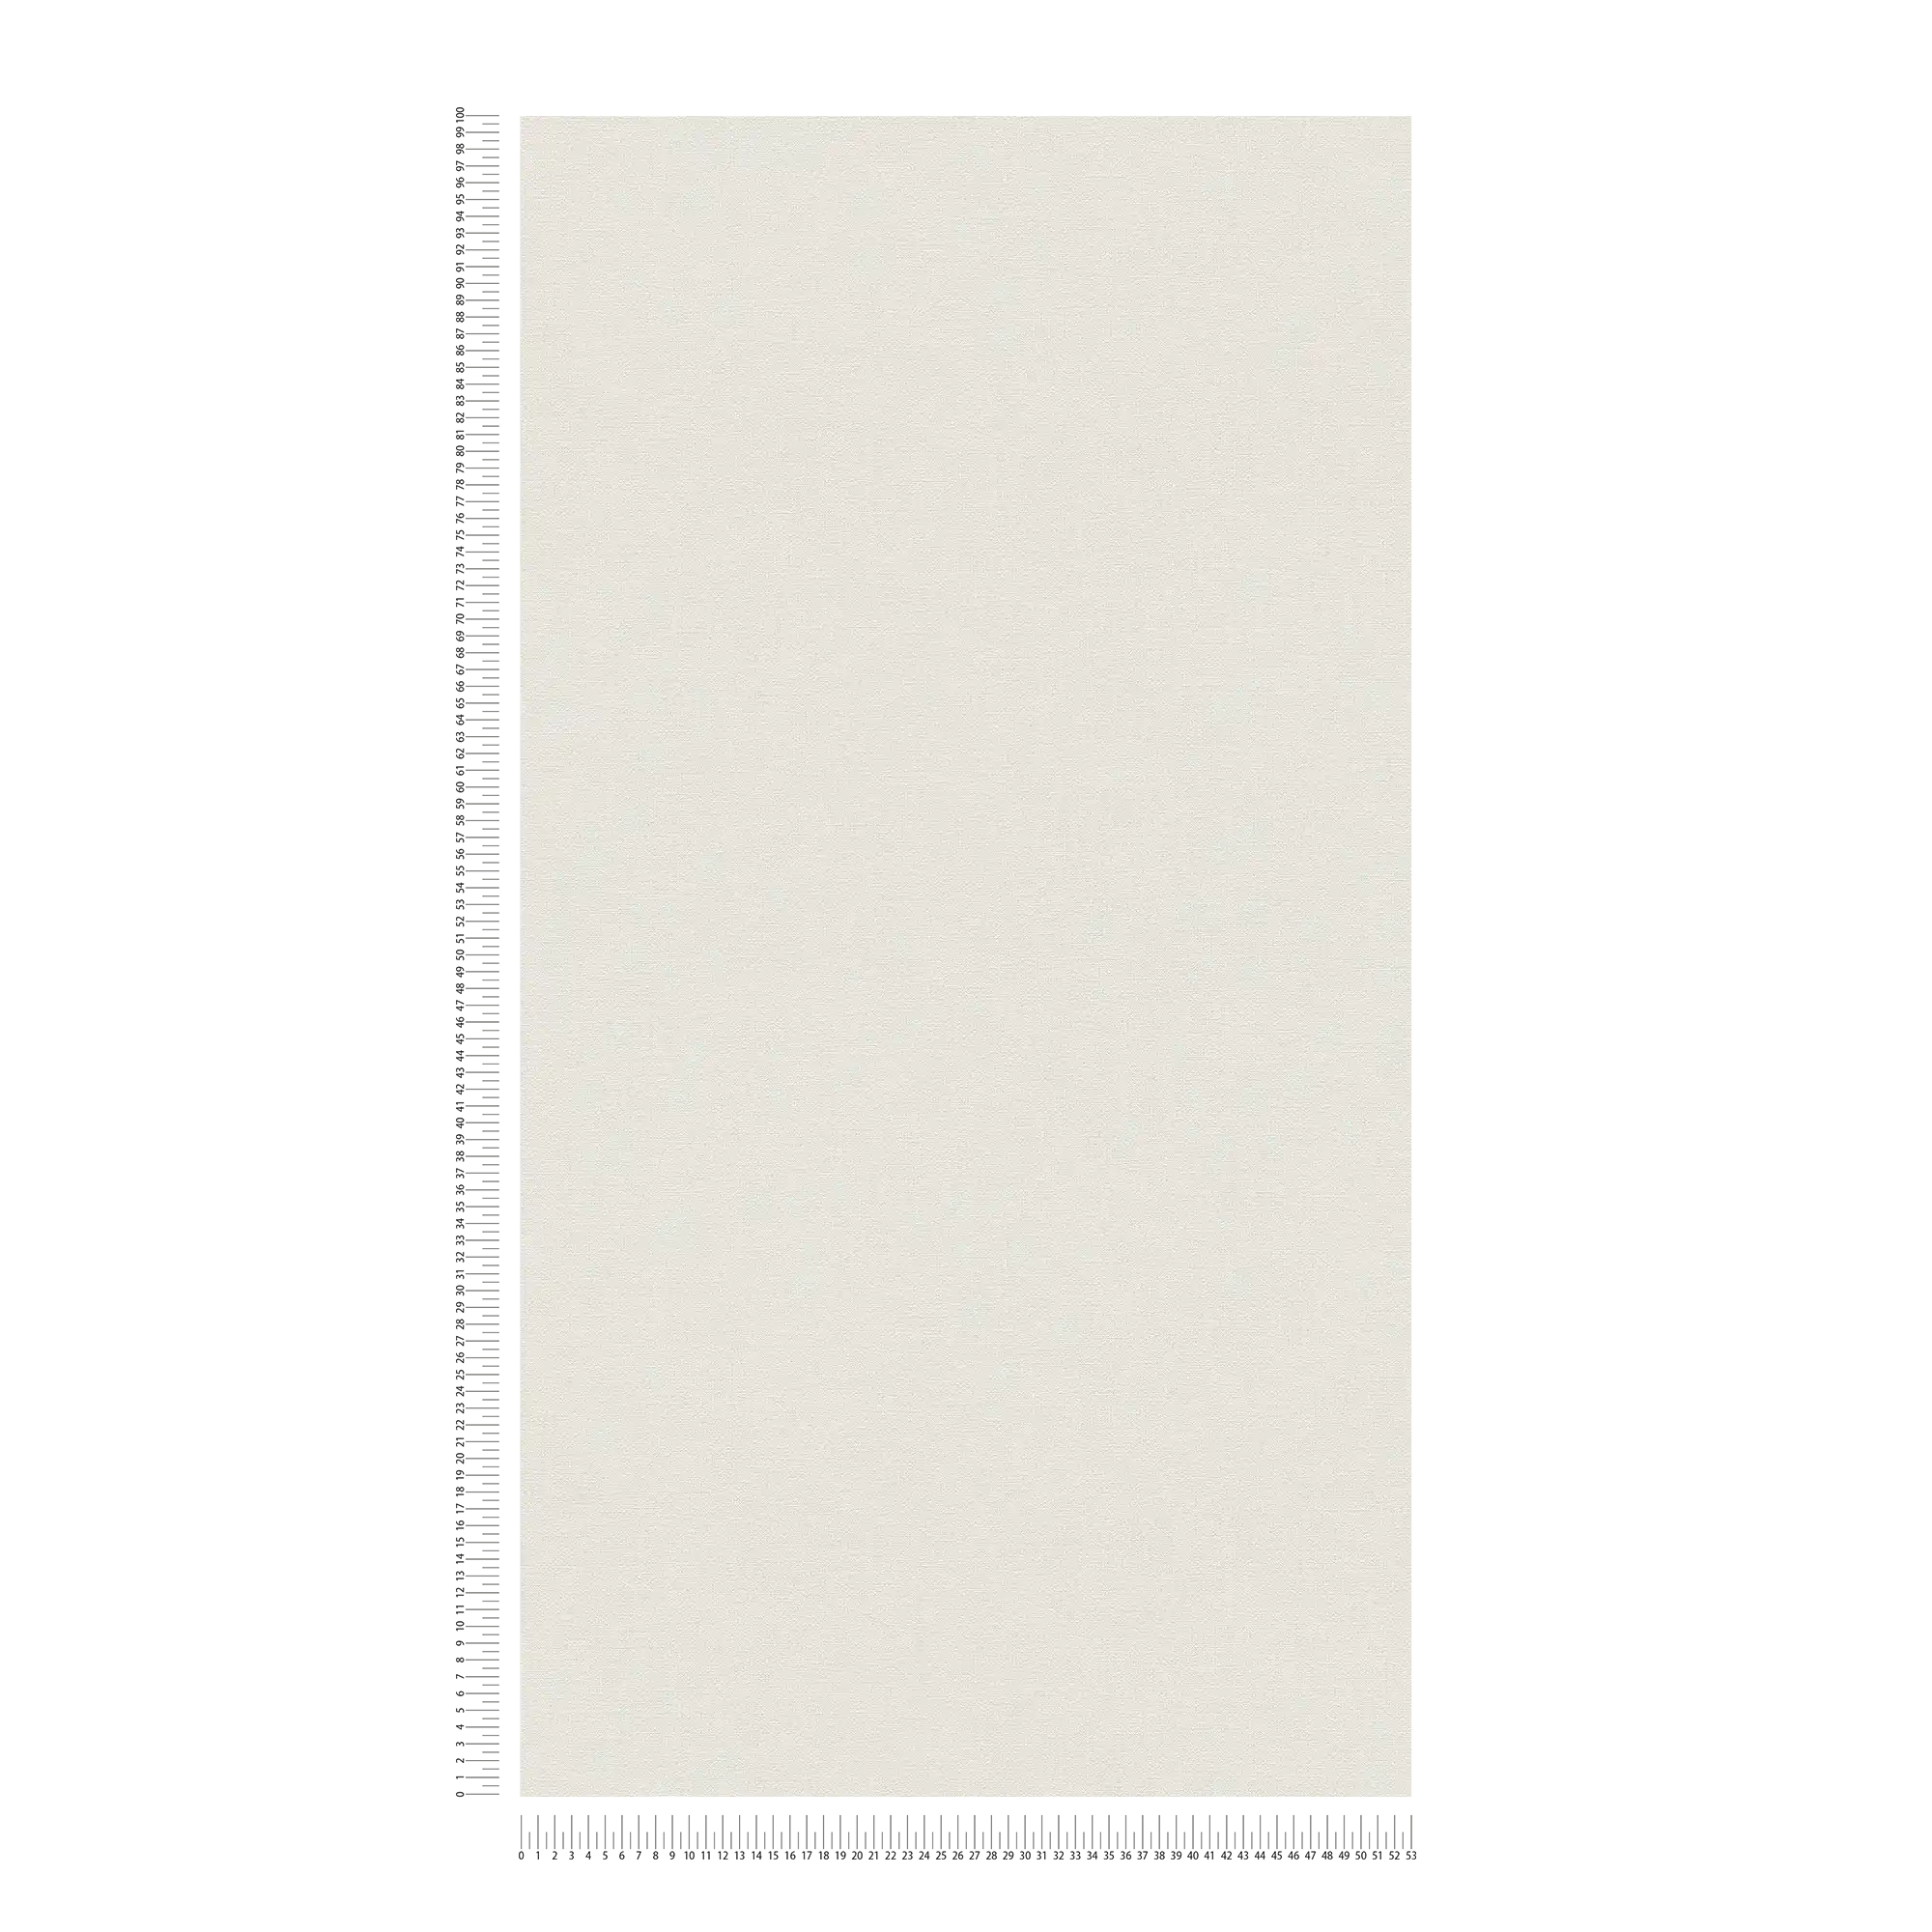             Carta da parati tessile ottica a tinta unita senza PVC - bianco, crema
        